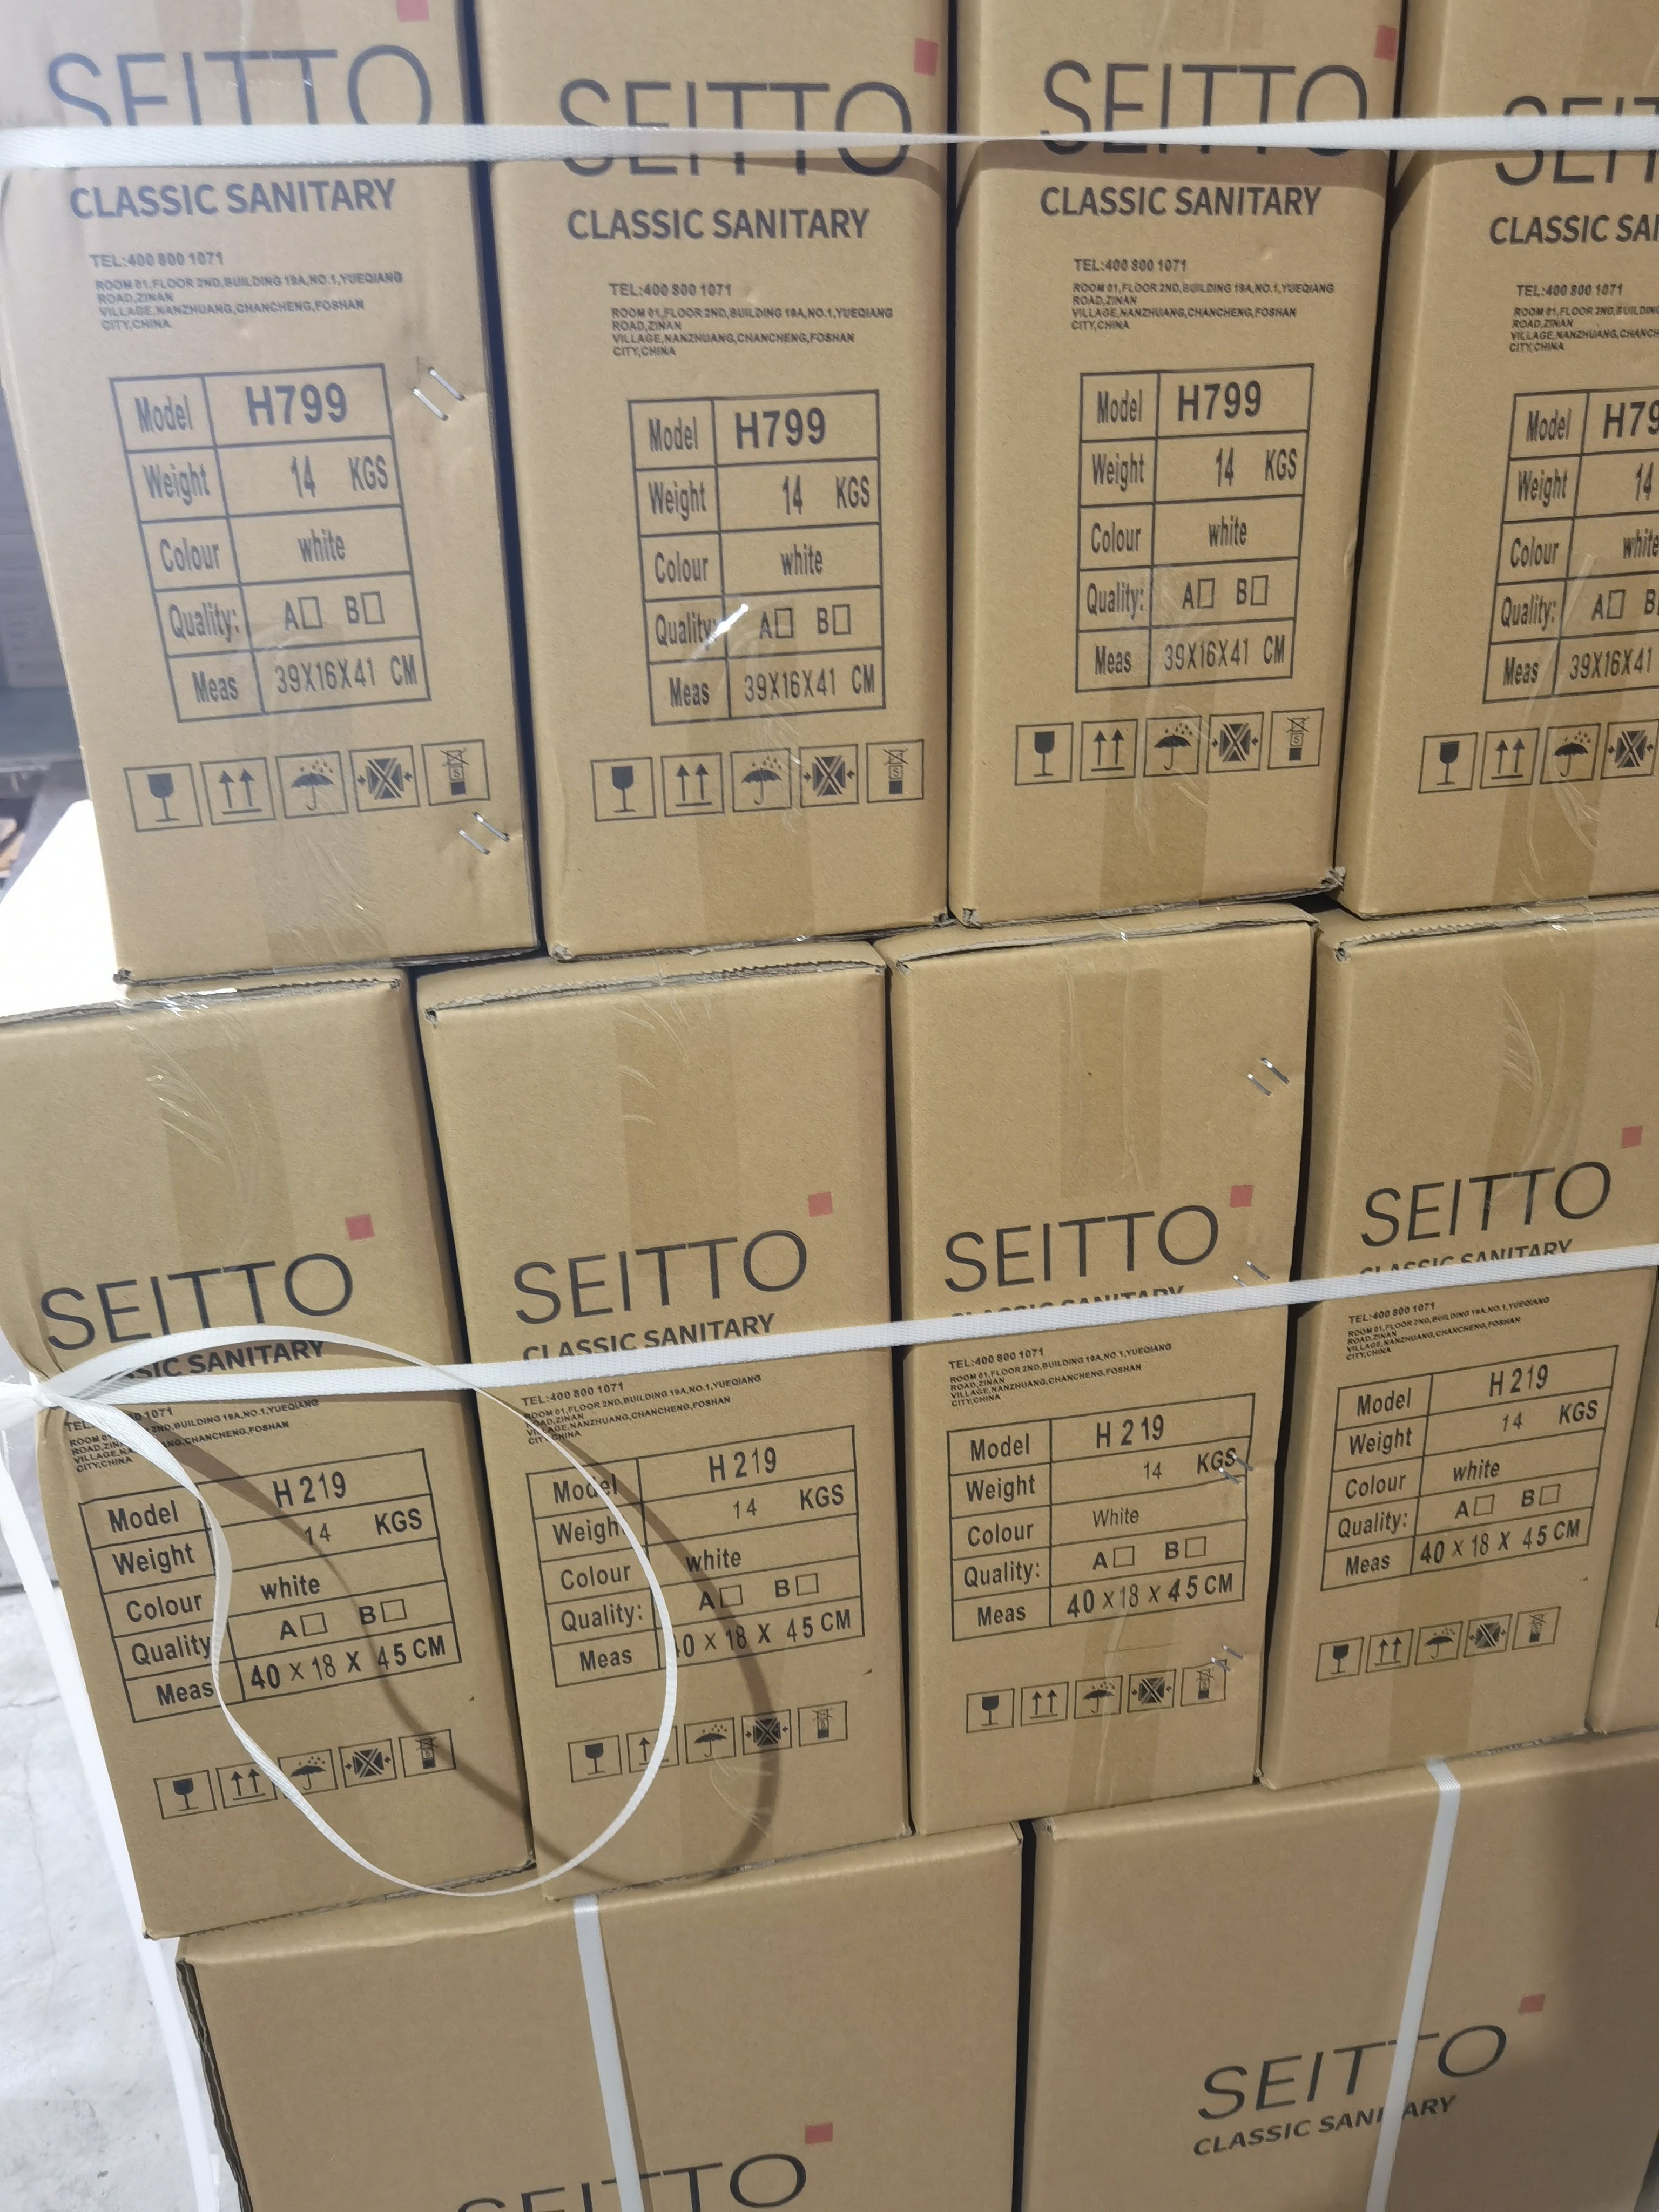 SEITTO Luxury Toilets Are Ready To Ship